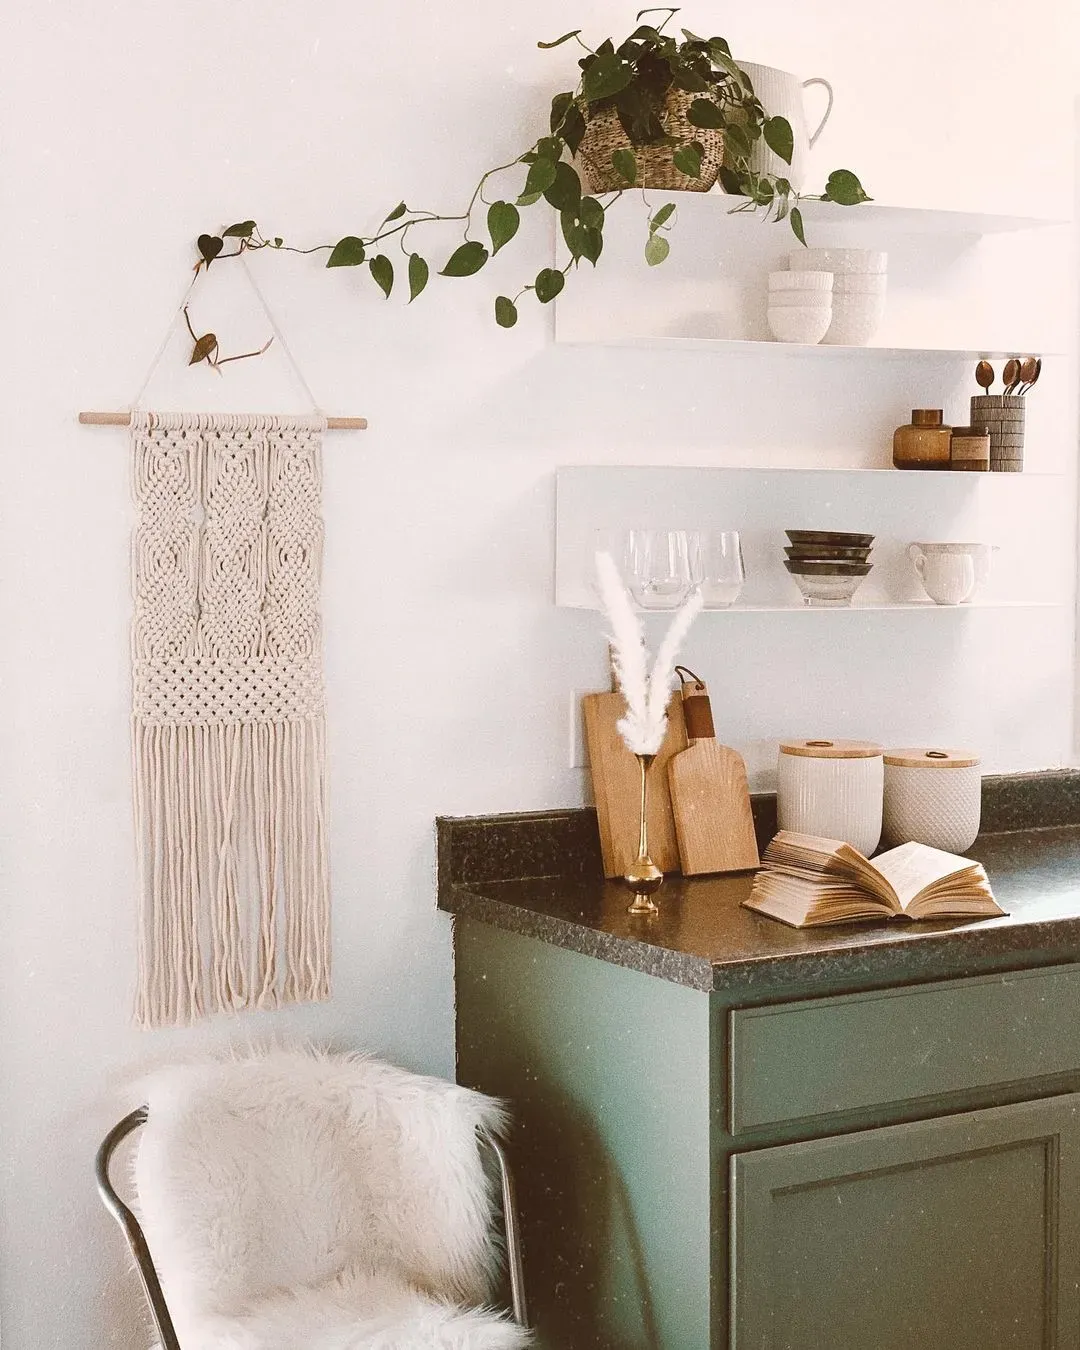 Behr Conifer Green kitchen cabinets picture